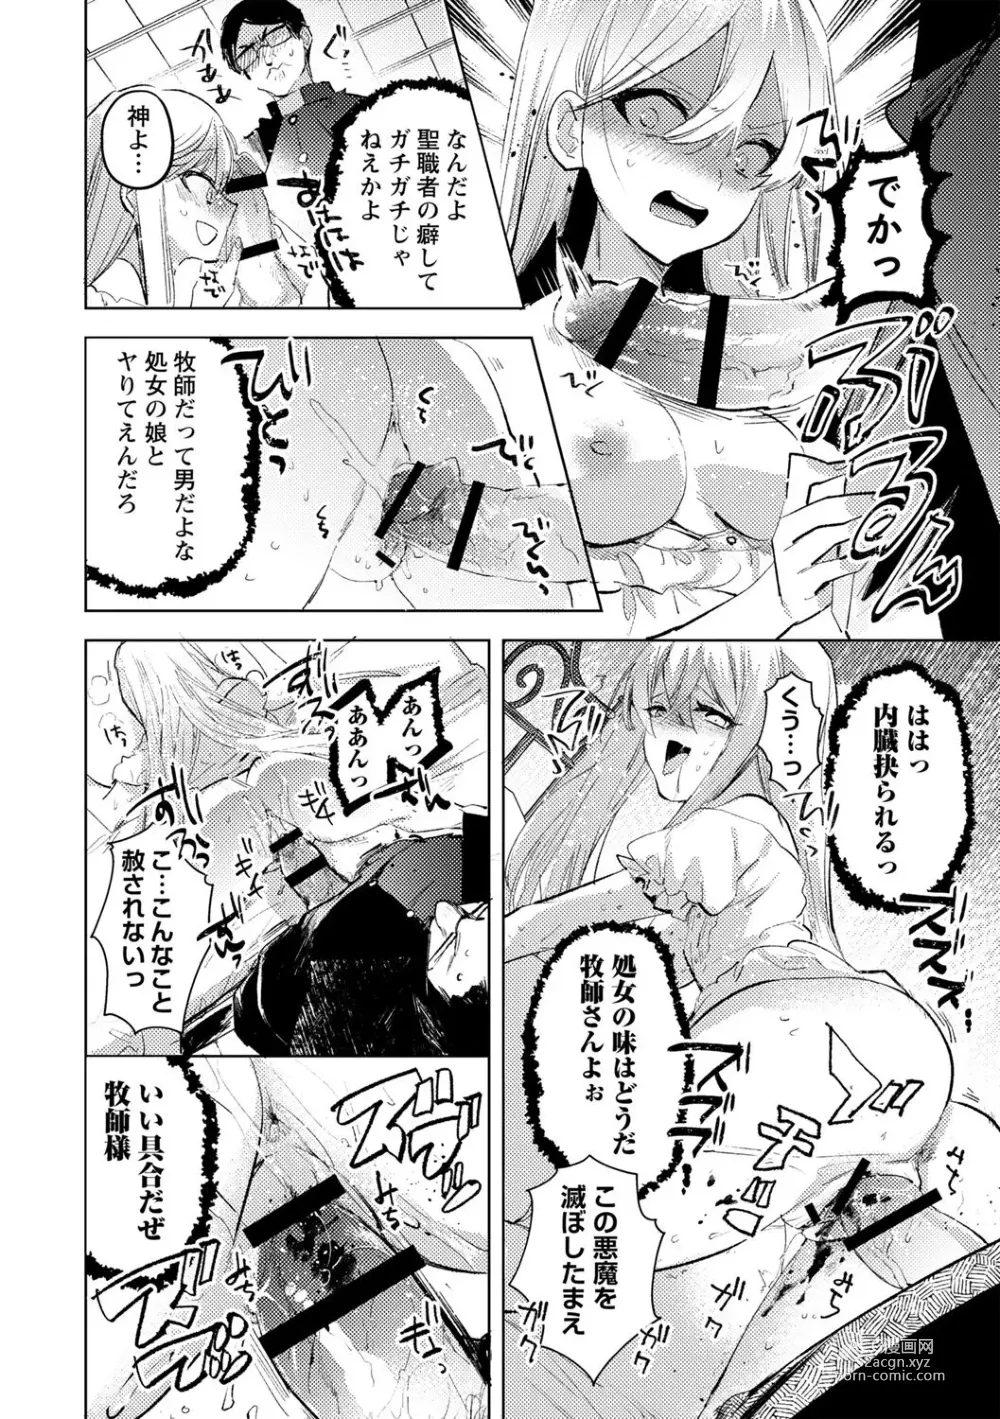 Page 4 of manga Akuma no Harai-kata